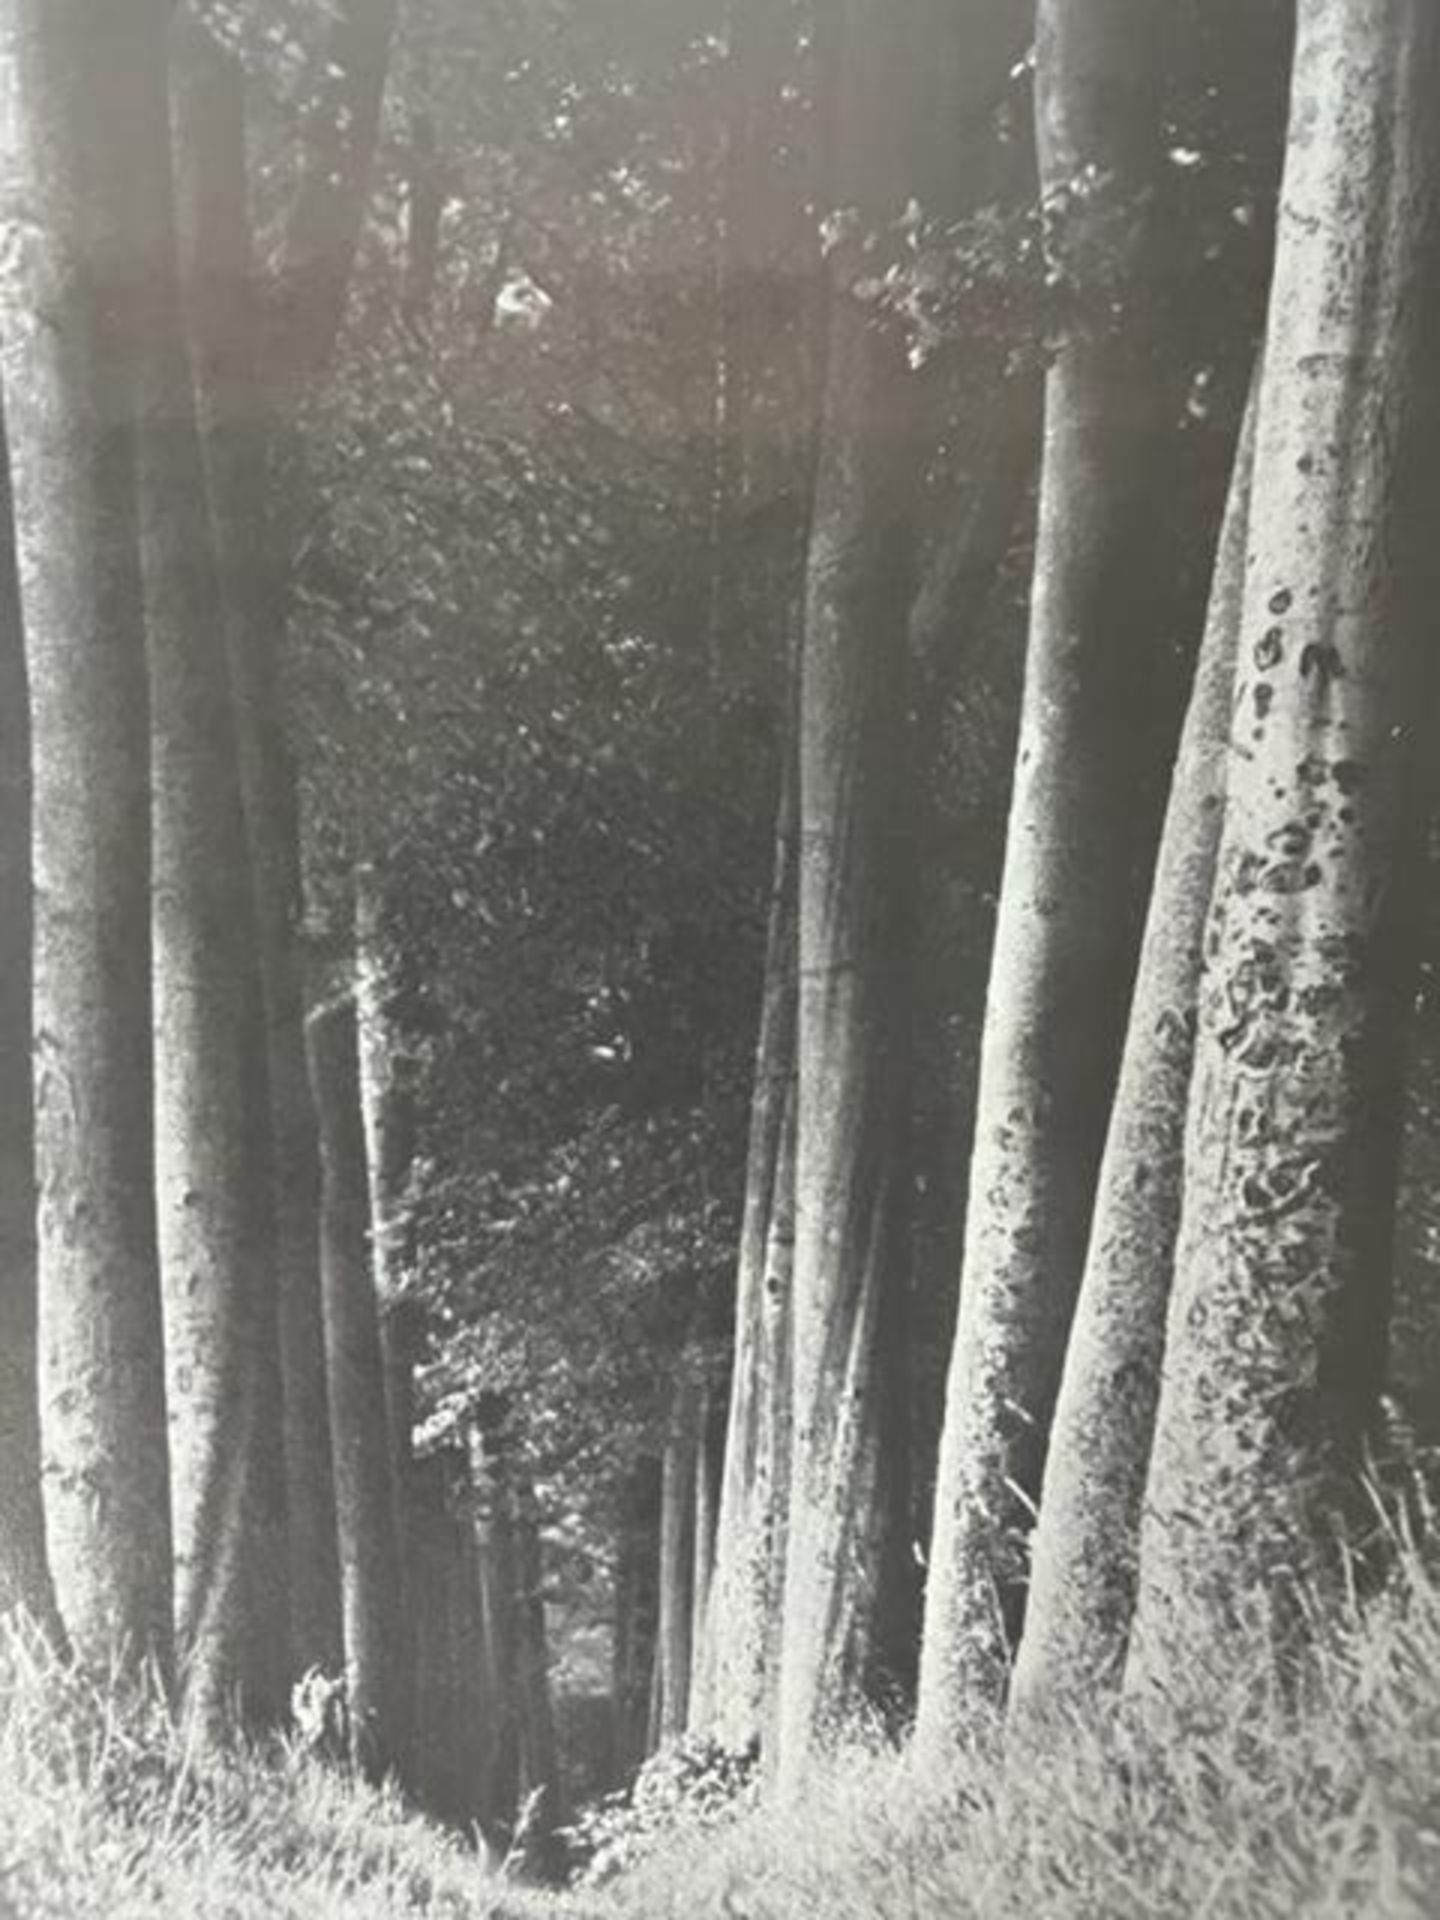 Man Ray "Untitled" Print. - Image 2 of 6